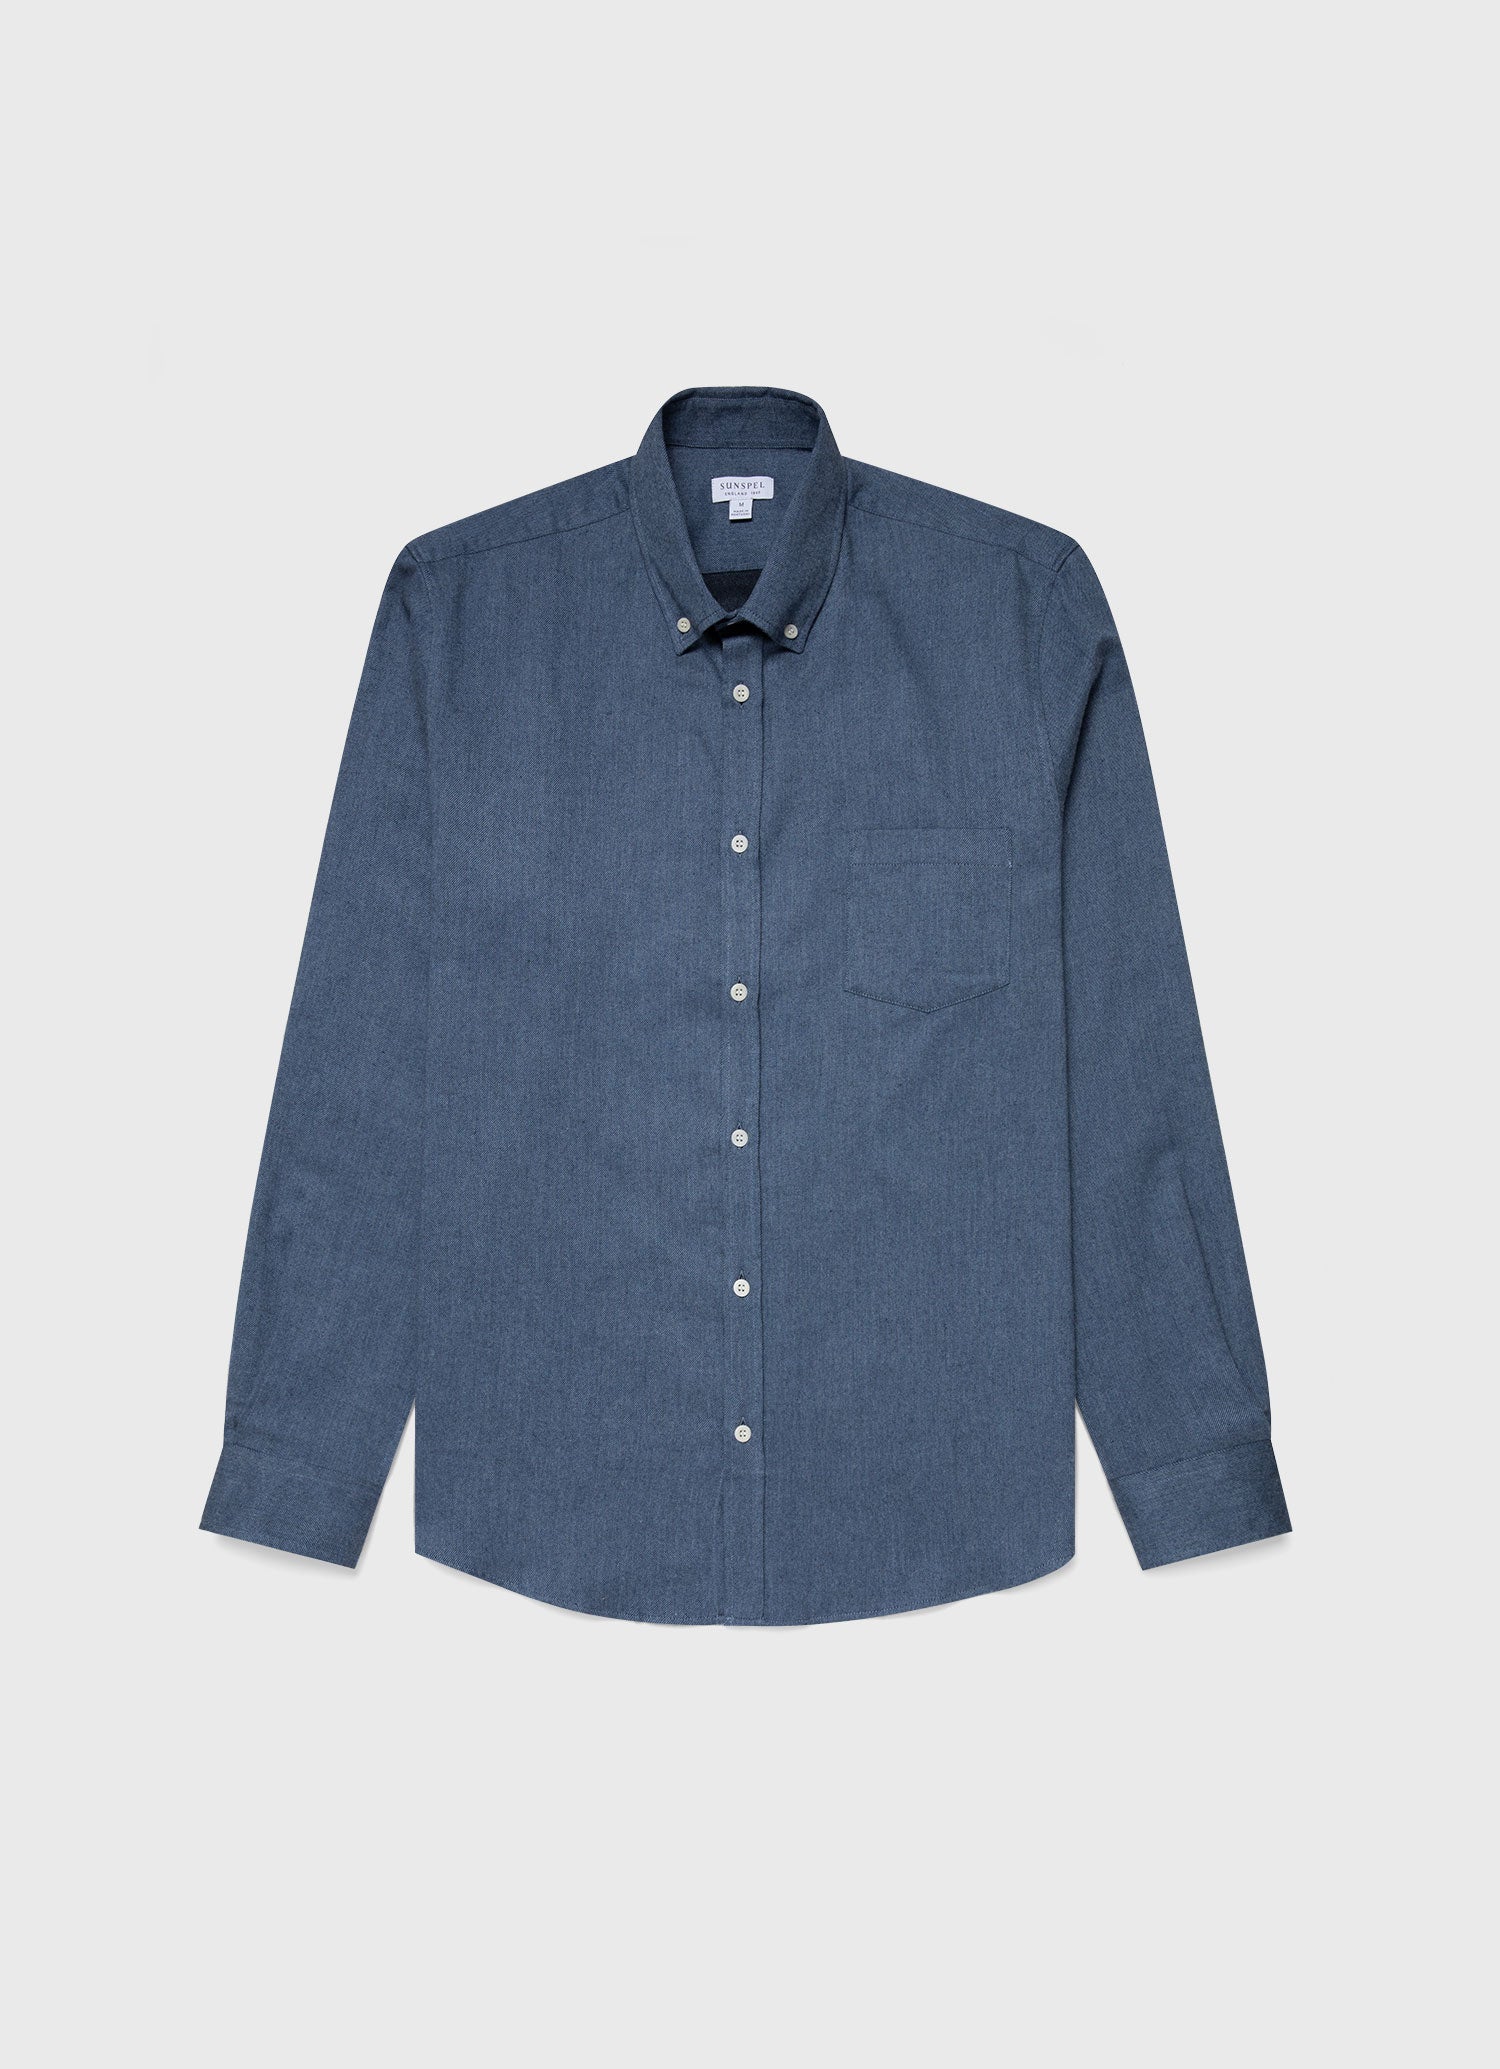 Men's Button Down Flannel Shirt in Blue Melange | Sunspel